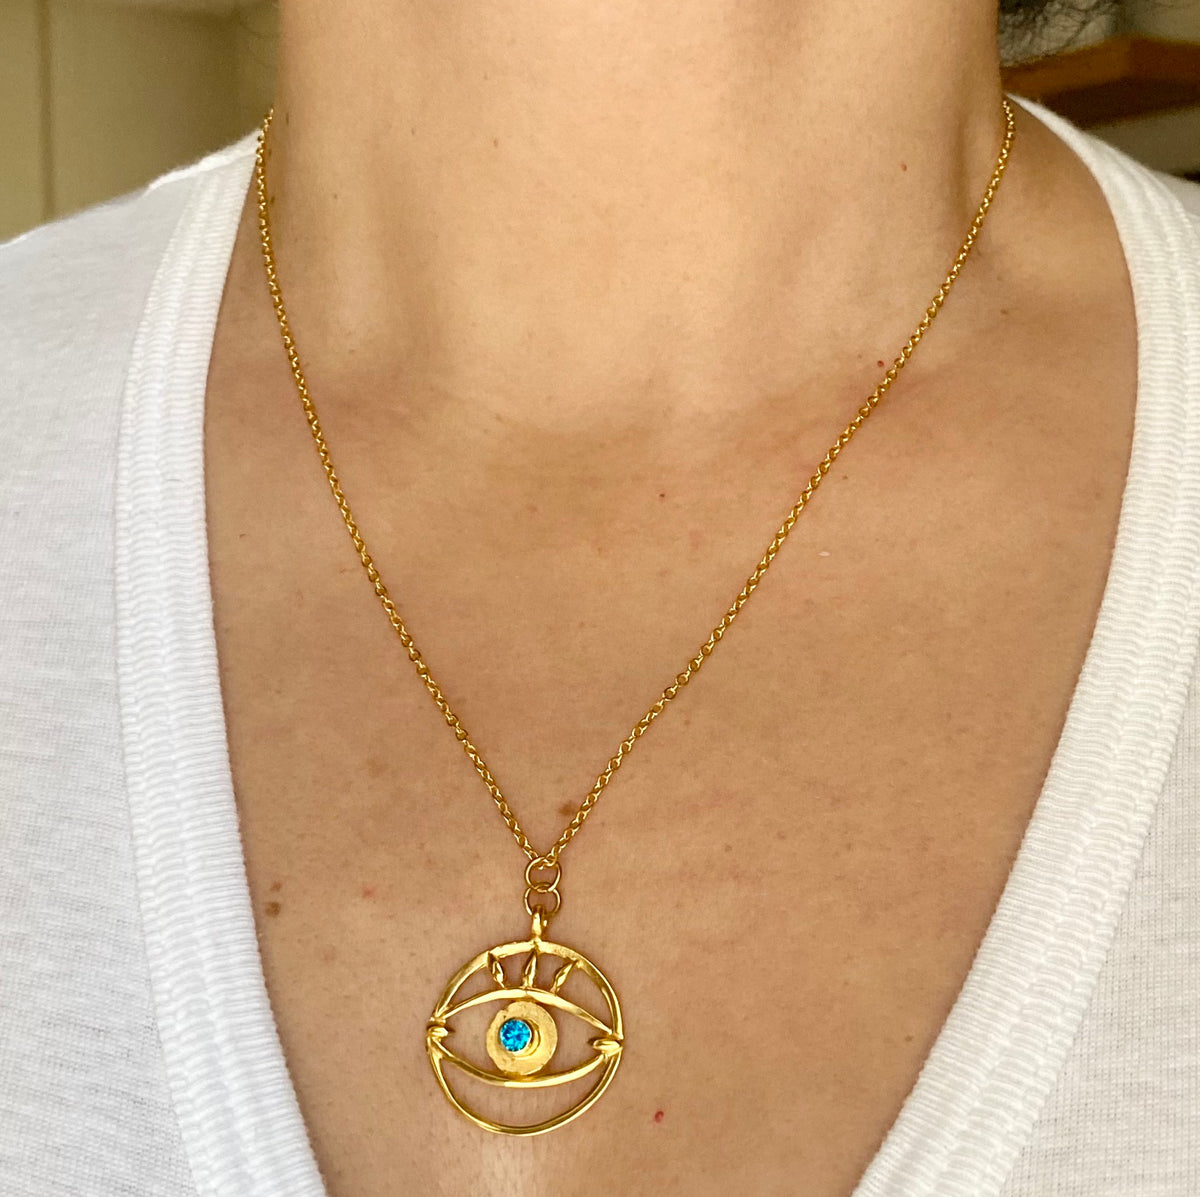 Evil eye necklace gold with blue gemstone